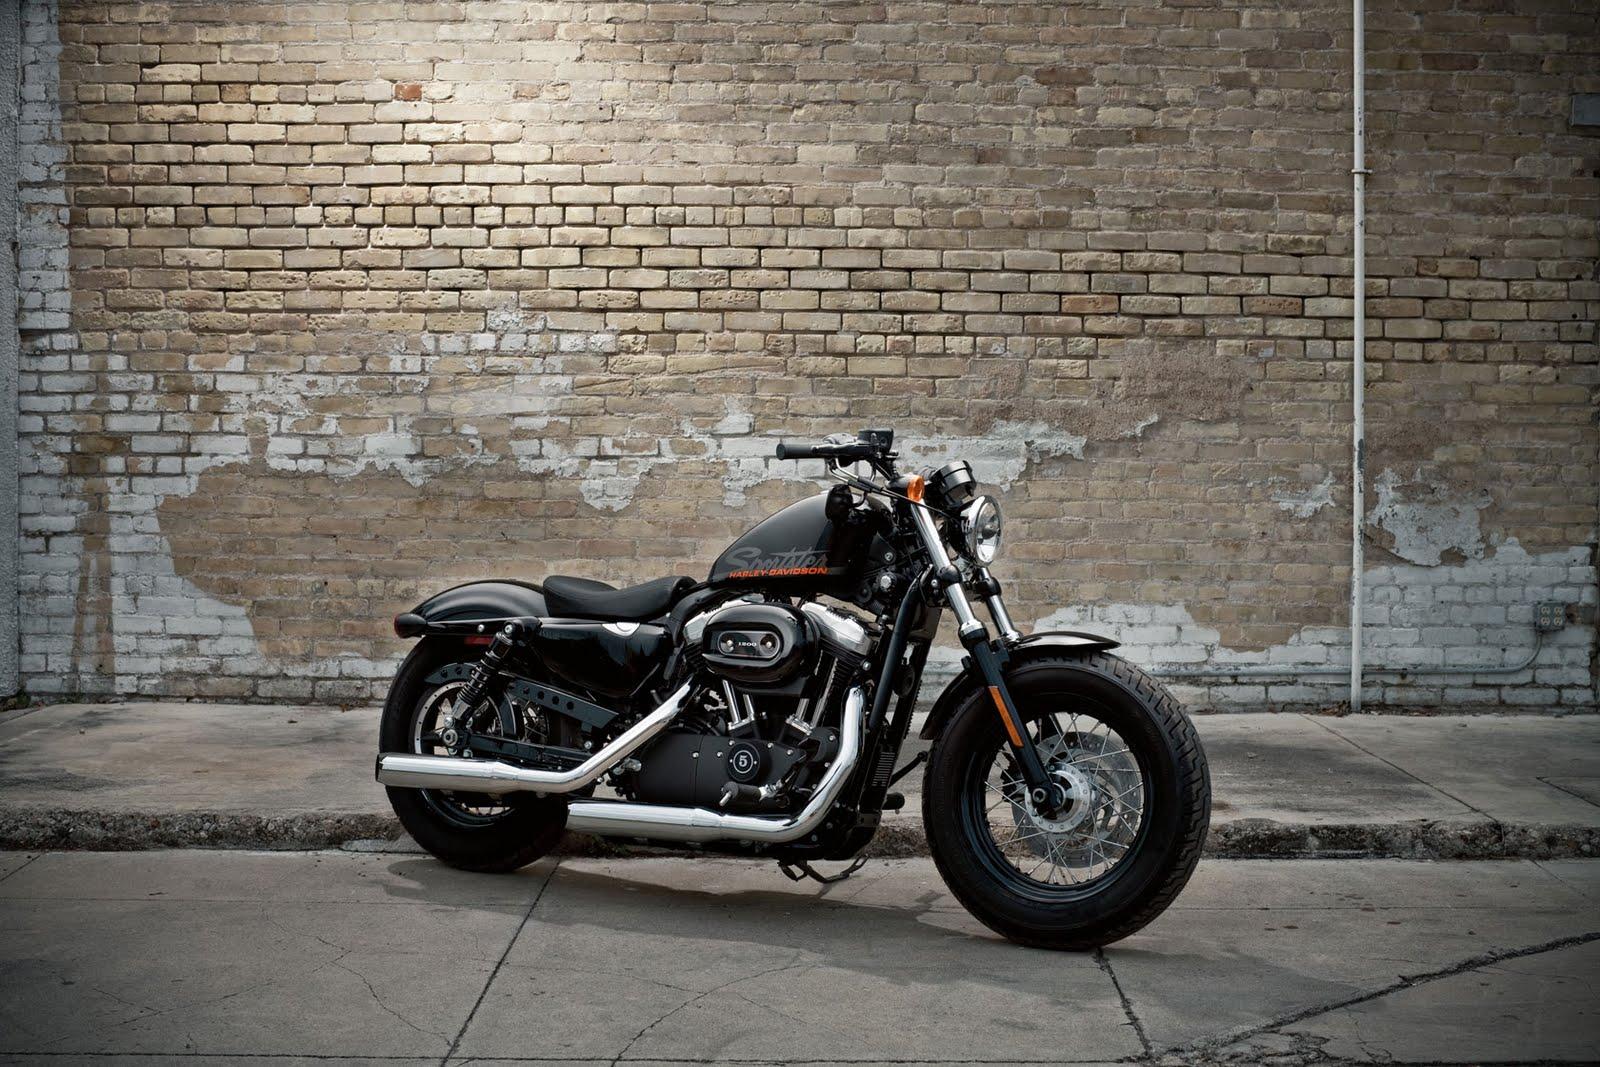 Harley Davidson Wallpaper 16895 1600x1067 px